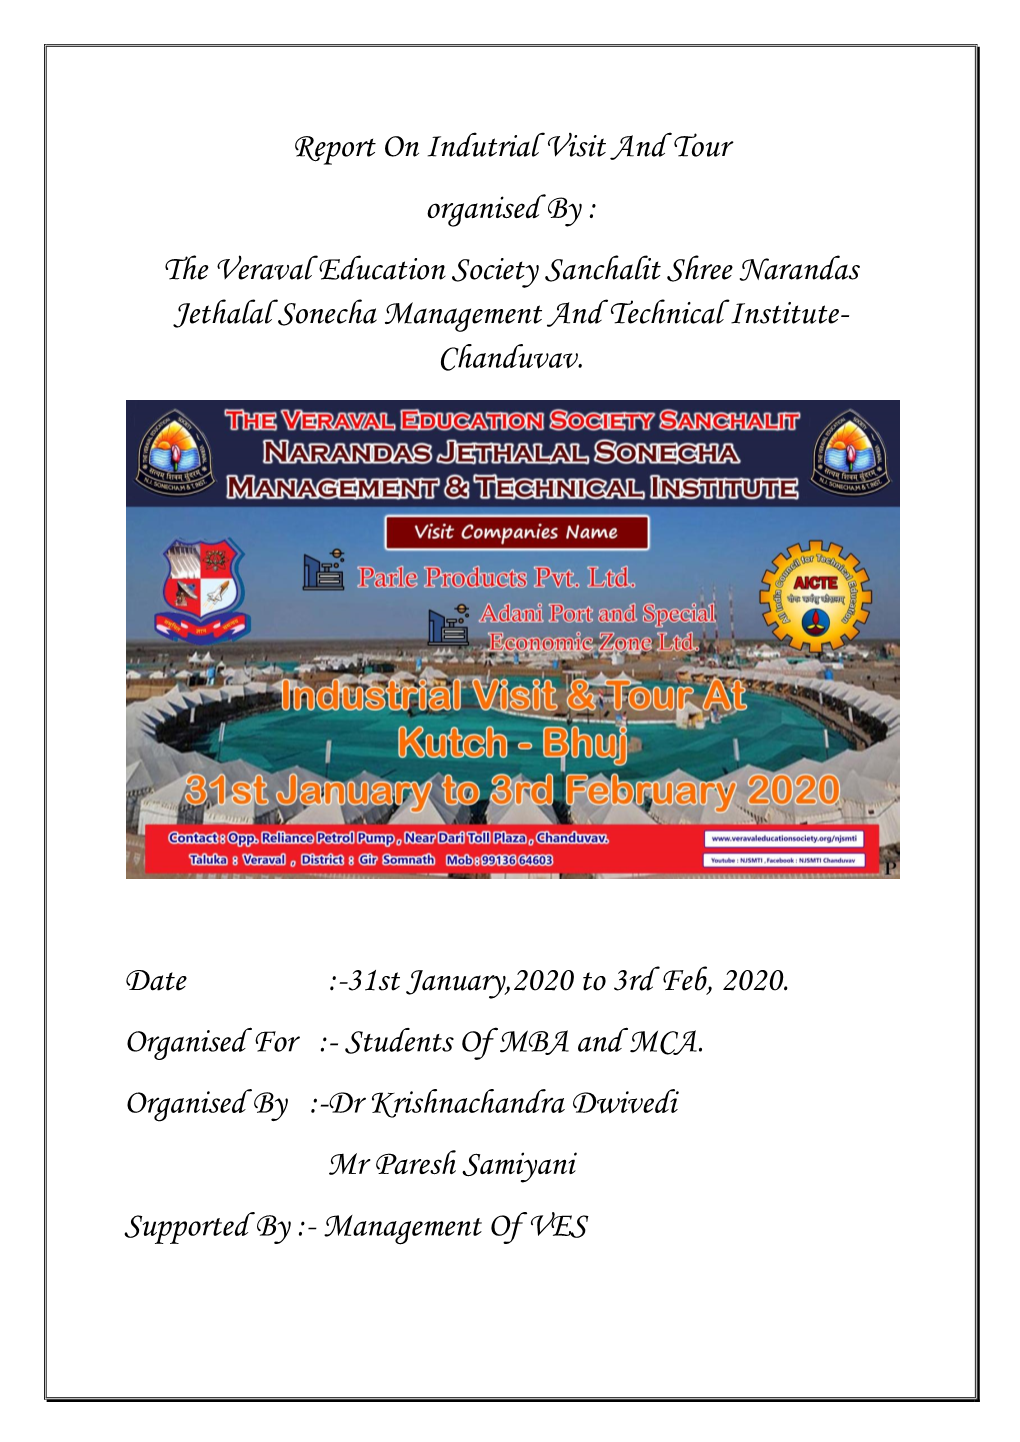 The Veraval Education Society Sanchalit Shree Narandas Jethalal Sonecha Management and Technical Institute- Chanduvav